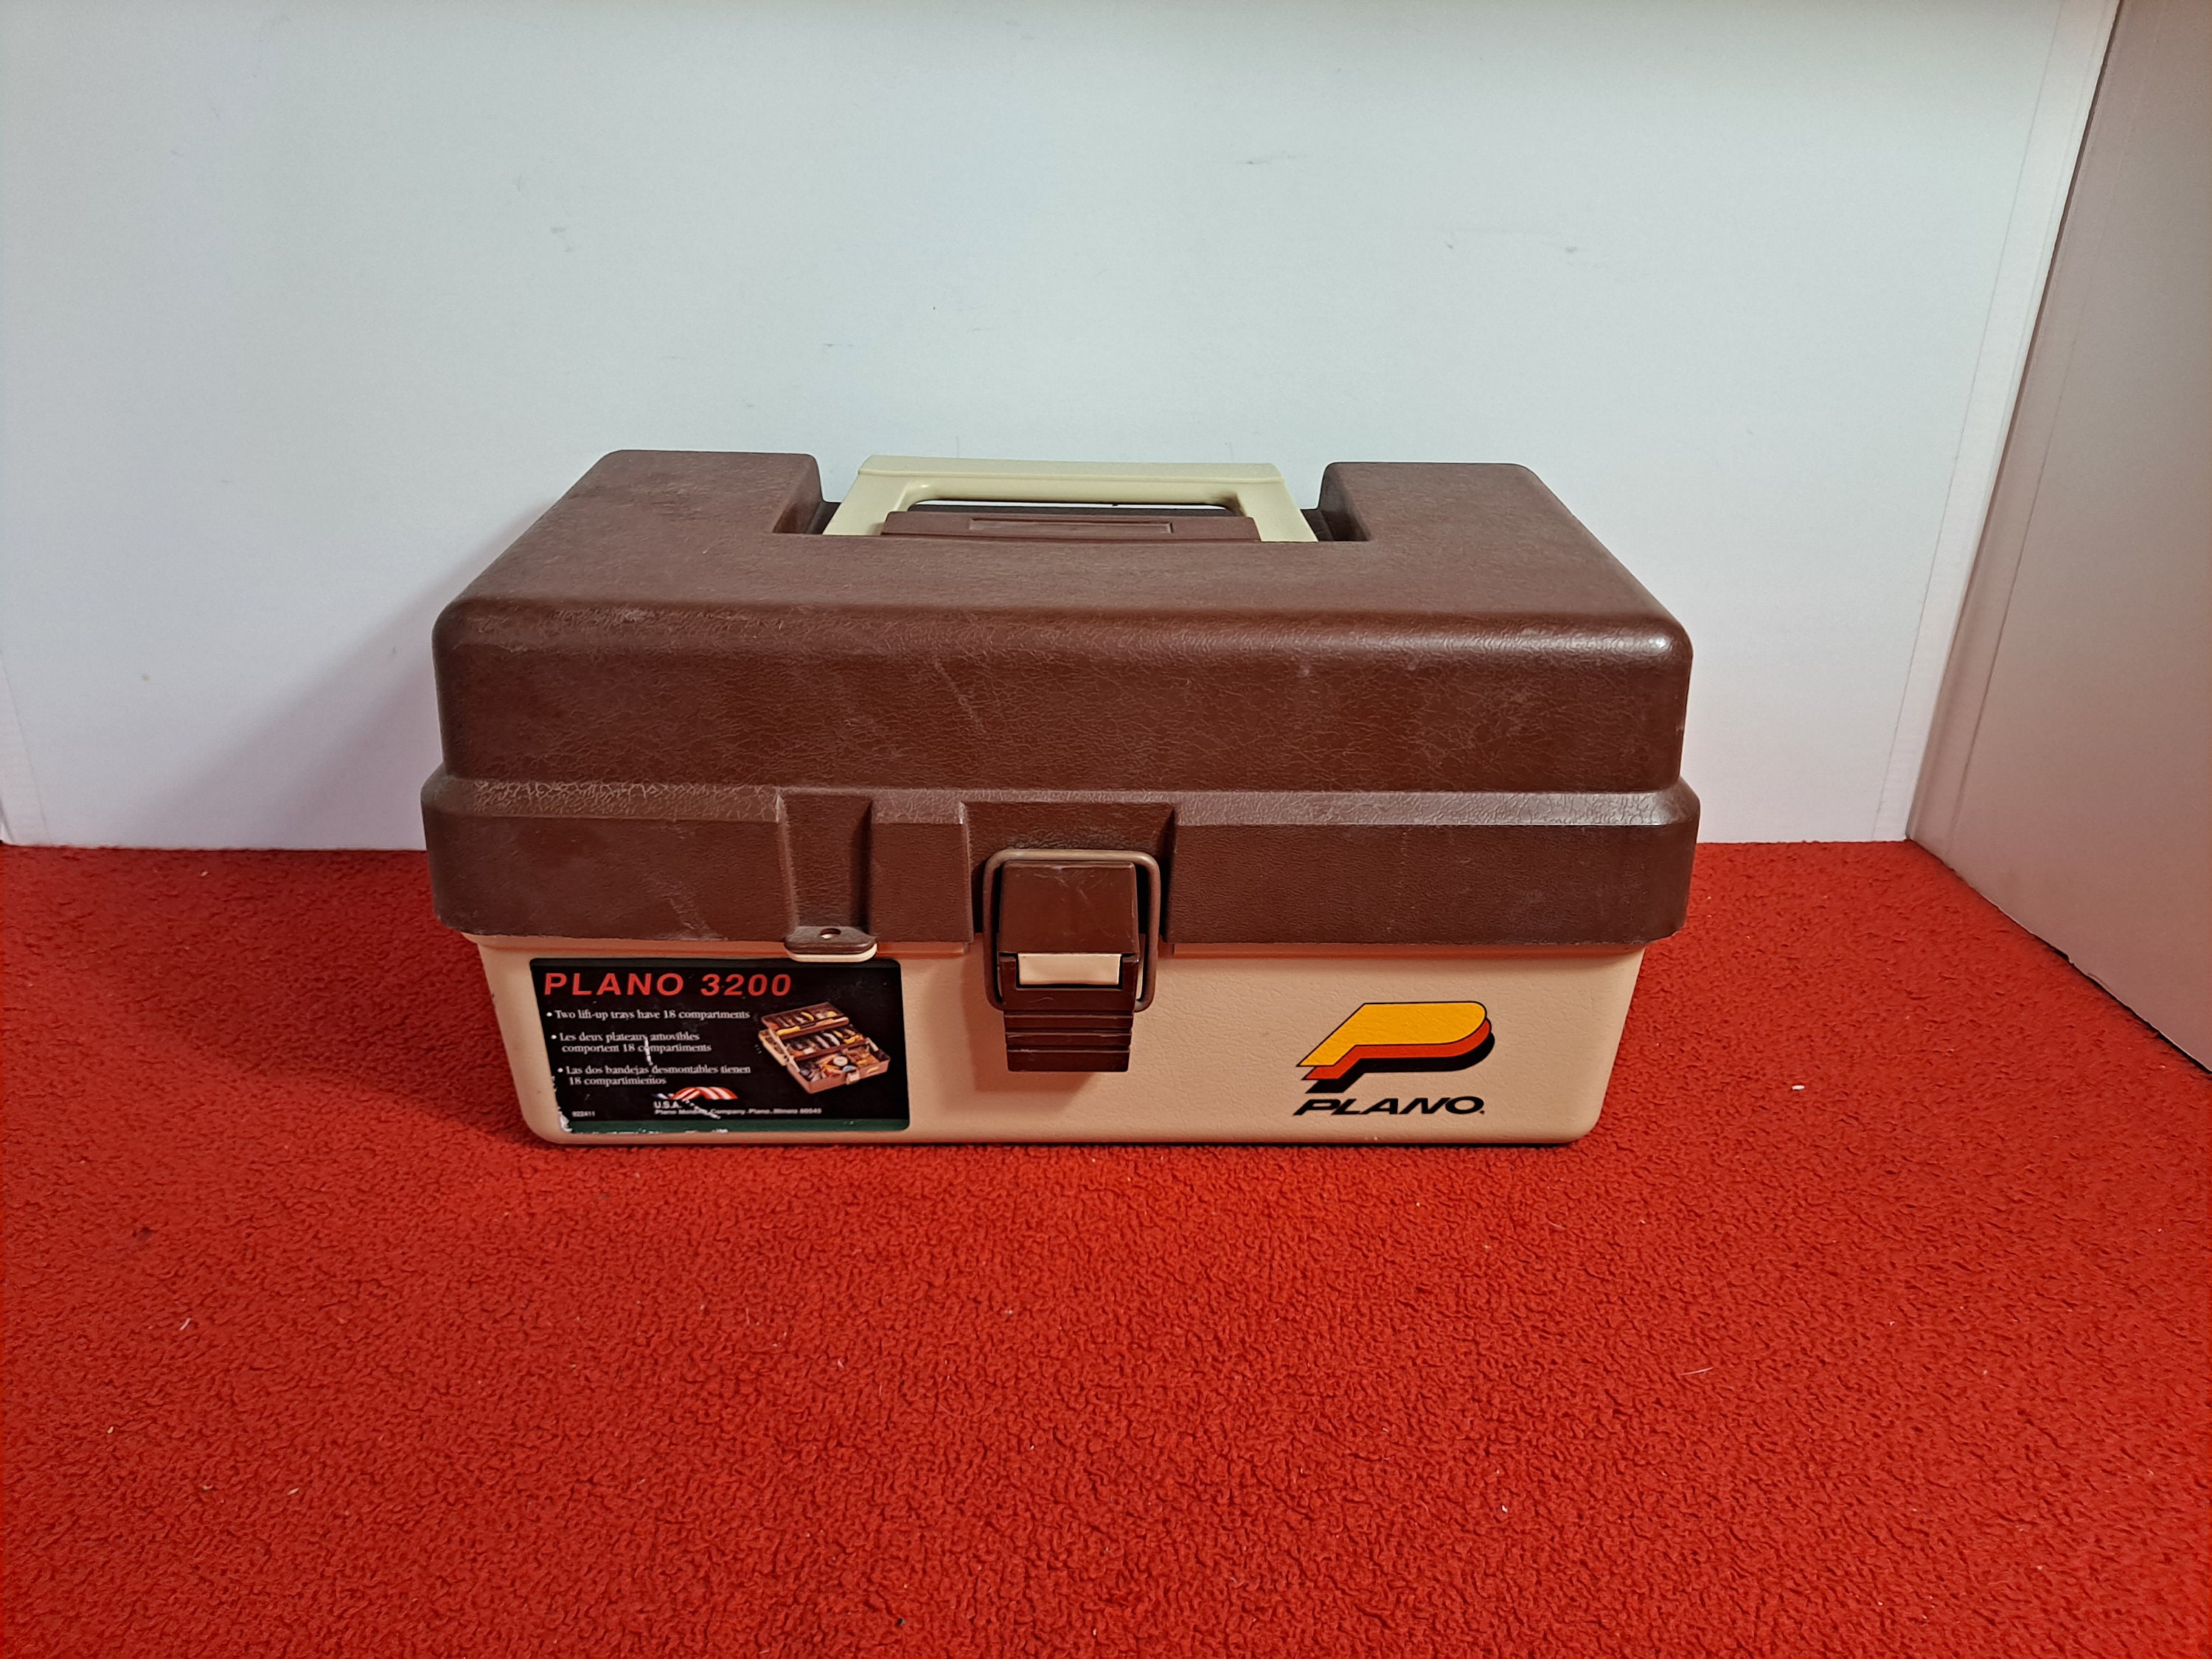 Vintage Tackle Box, Plano 3200 Tackle Box, Plastic Tackle Box, Art